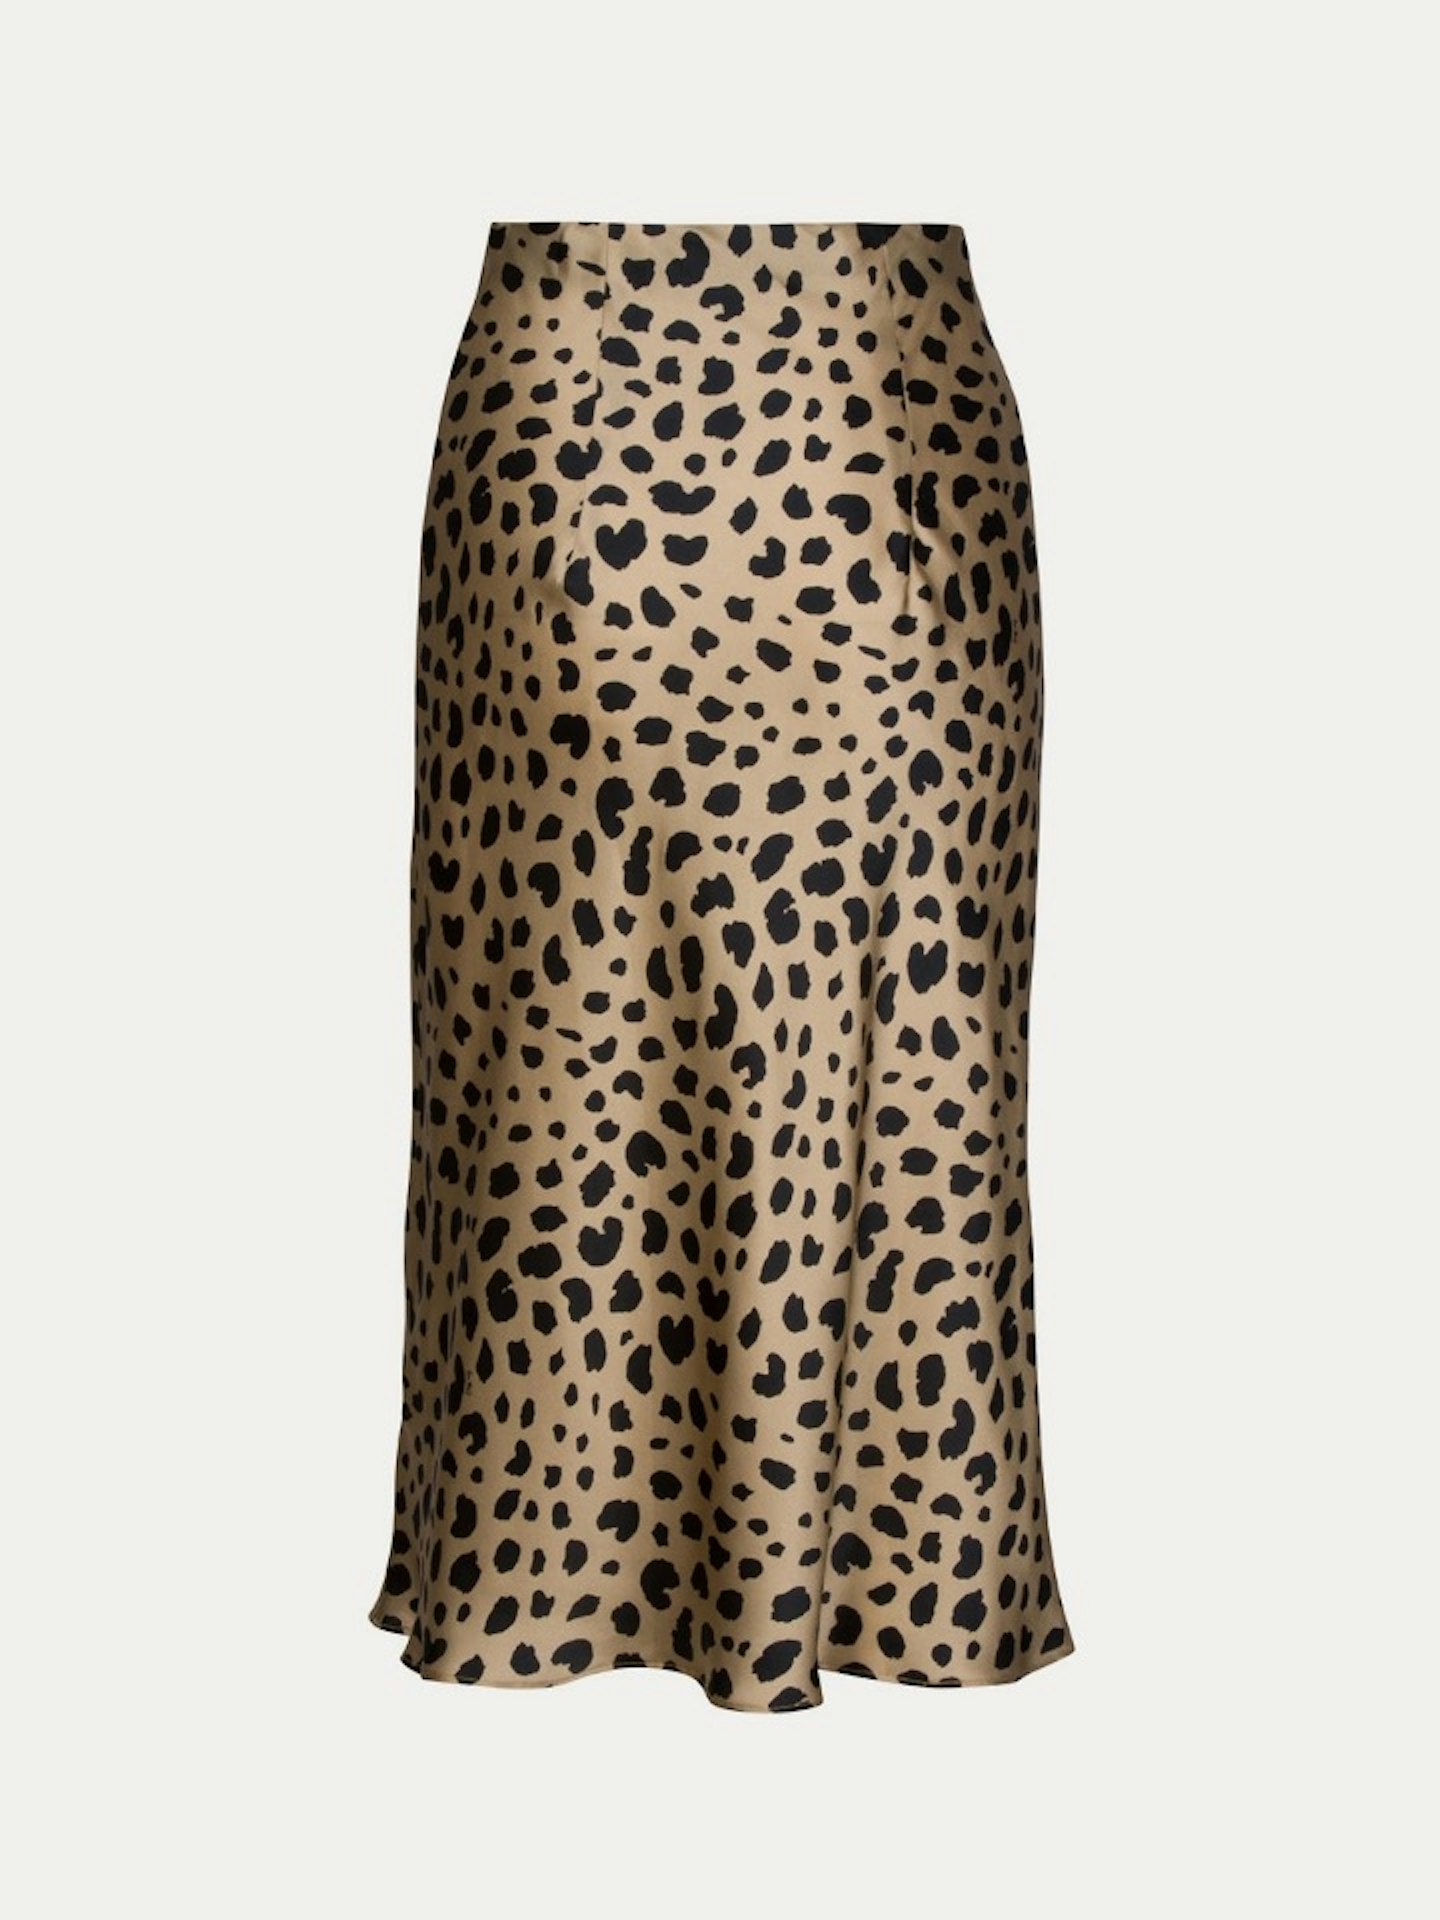 Ru00e9alisation Par, Naomi Leopard Print Skirt, £175